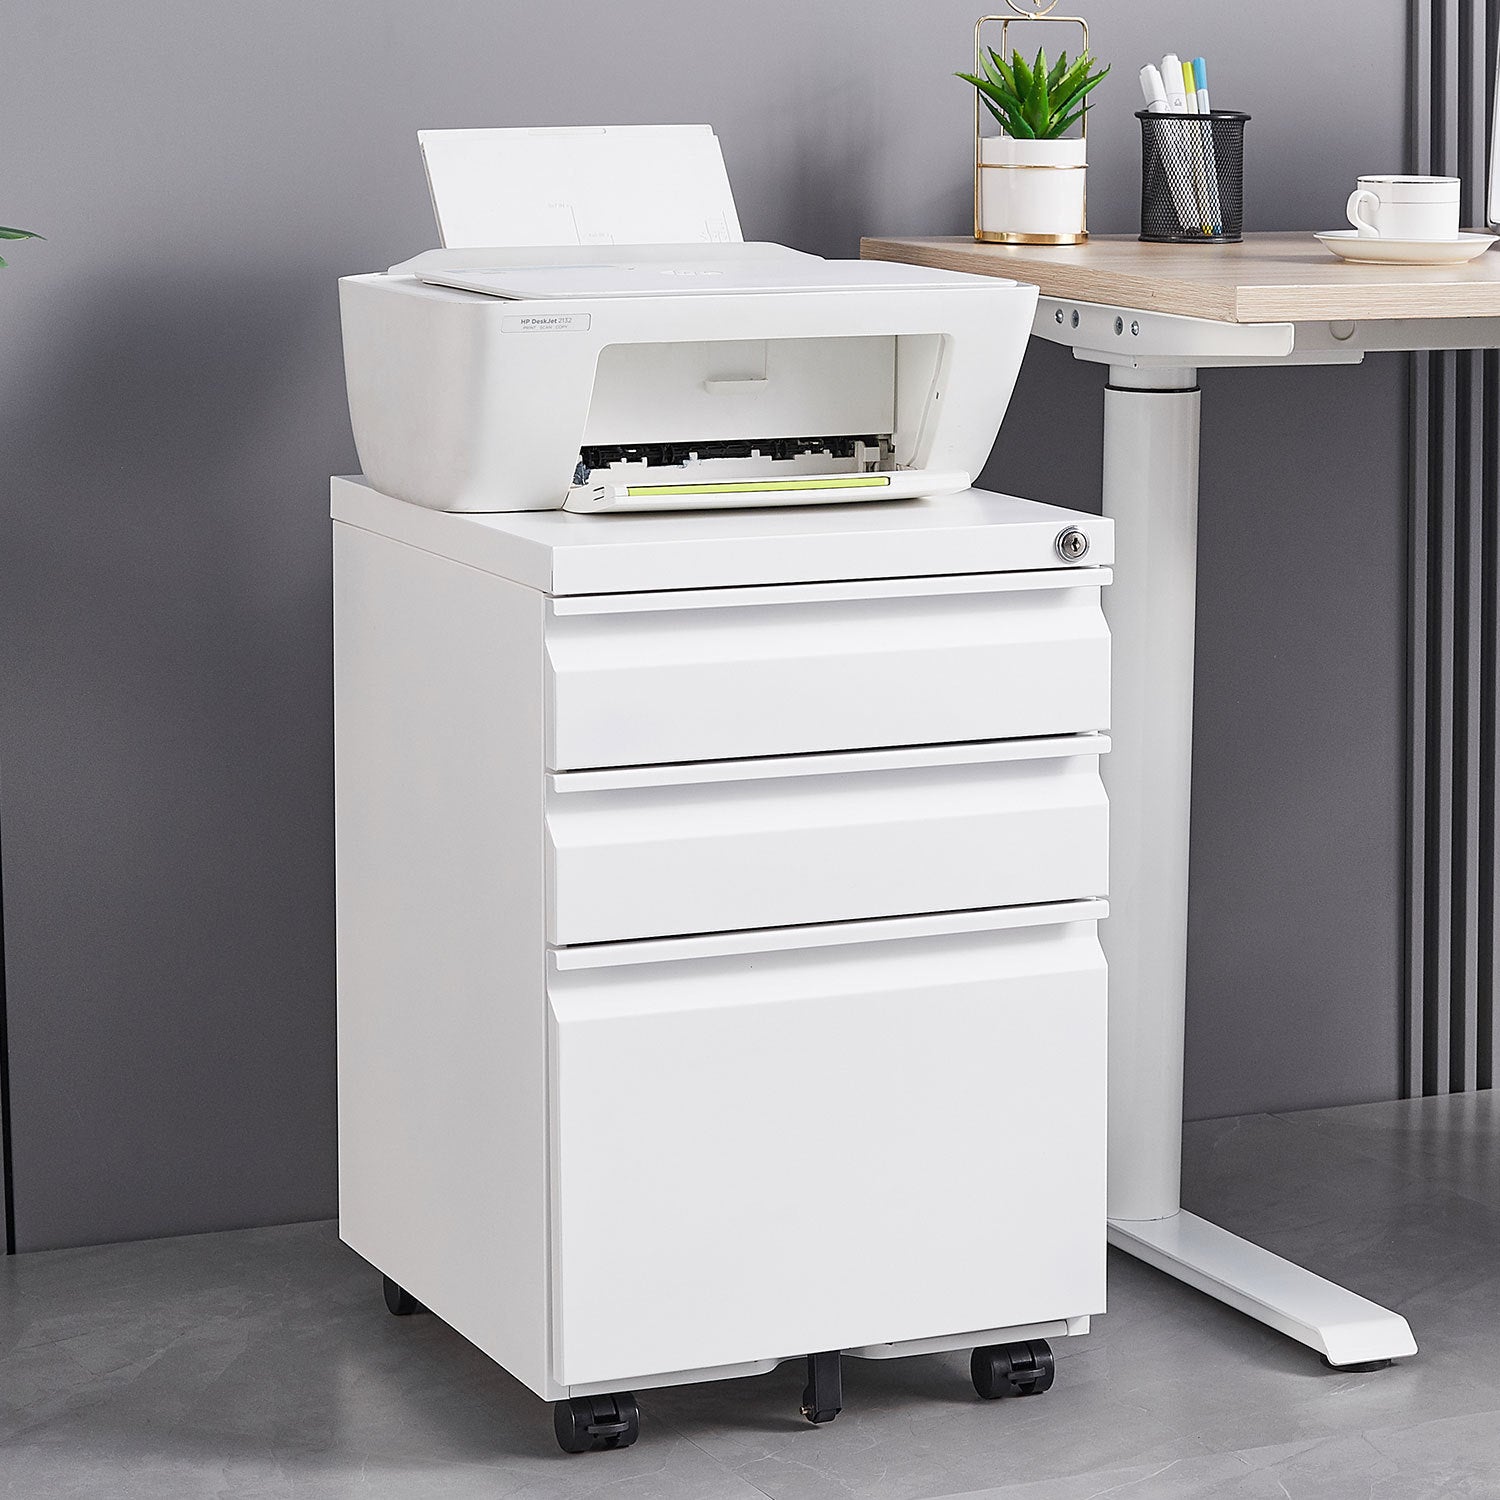 Vertical 3-Drawer White Metal Mobile Pedestal File Cabinet for Letter or Legal Size